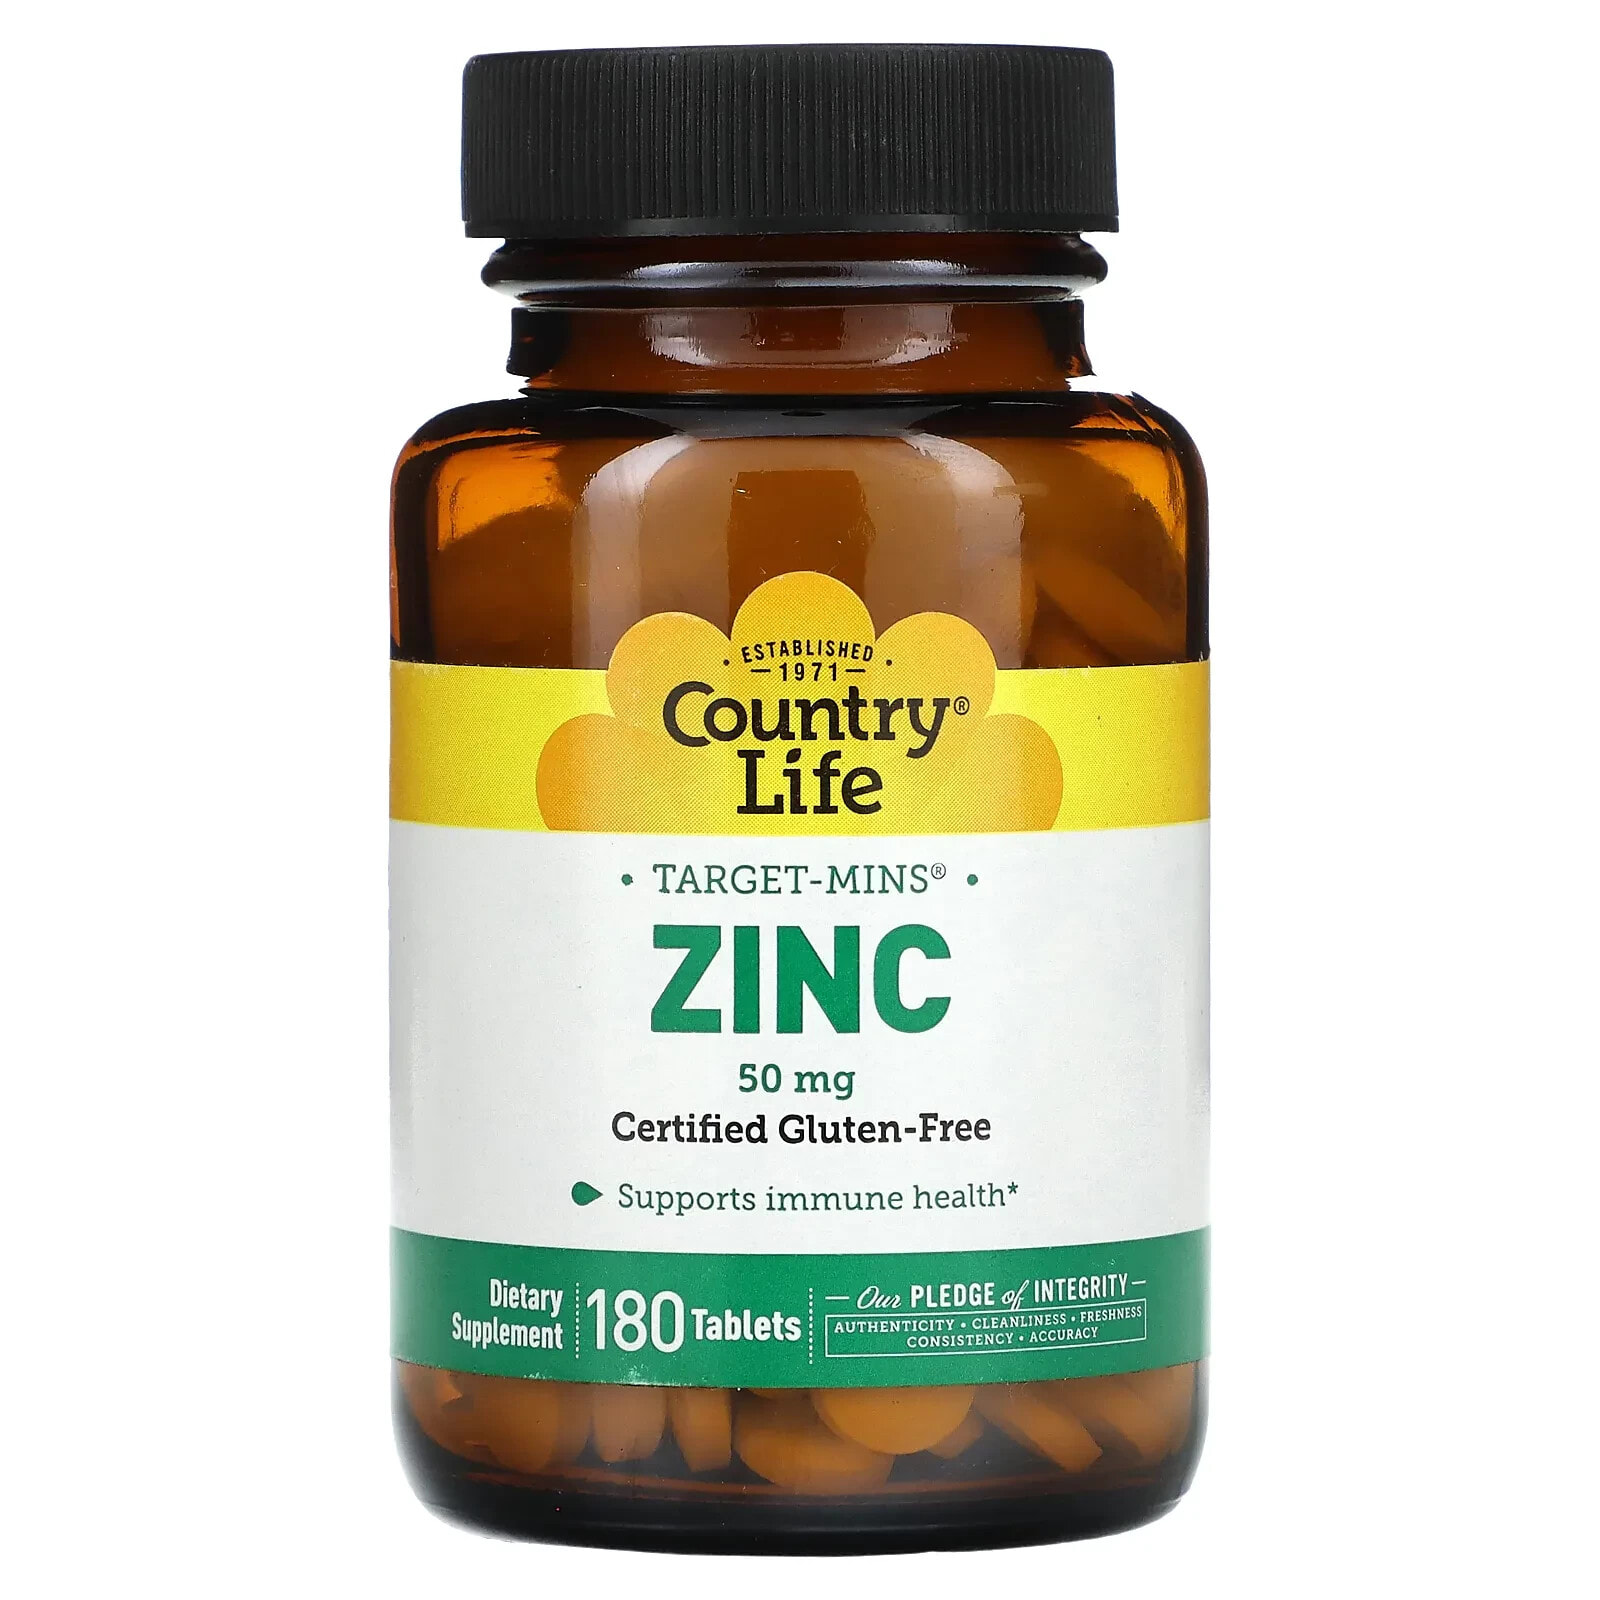 Target-Mins Zinc, 50 mg, 90 Tablets